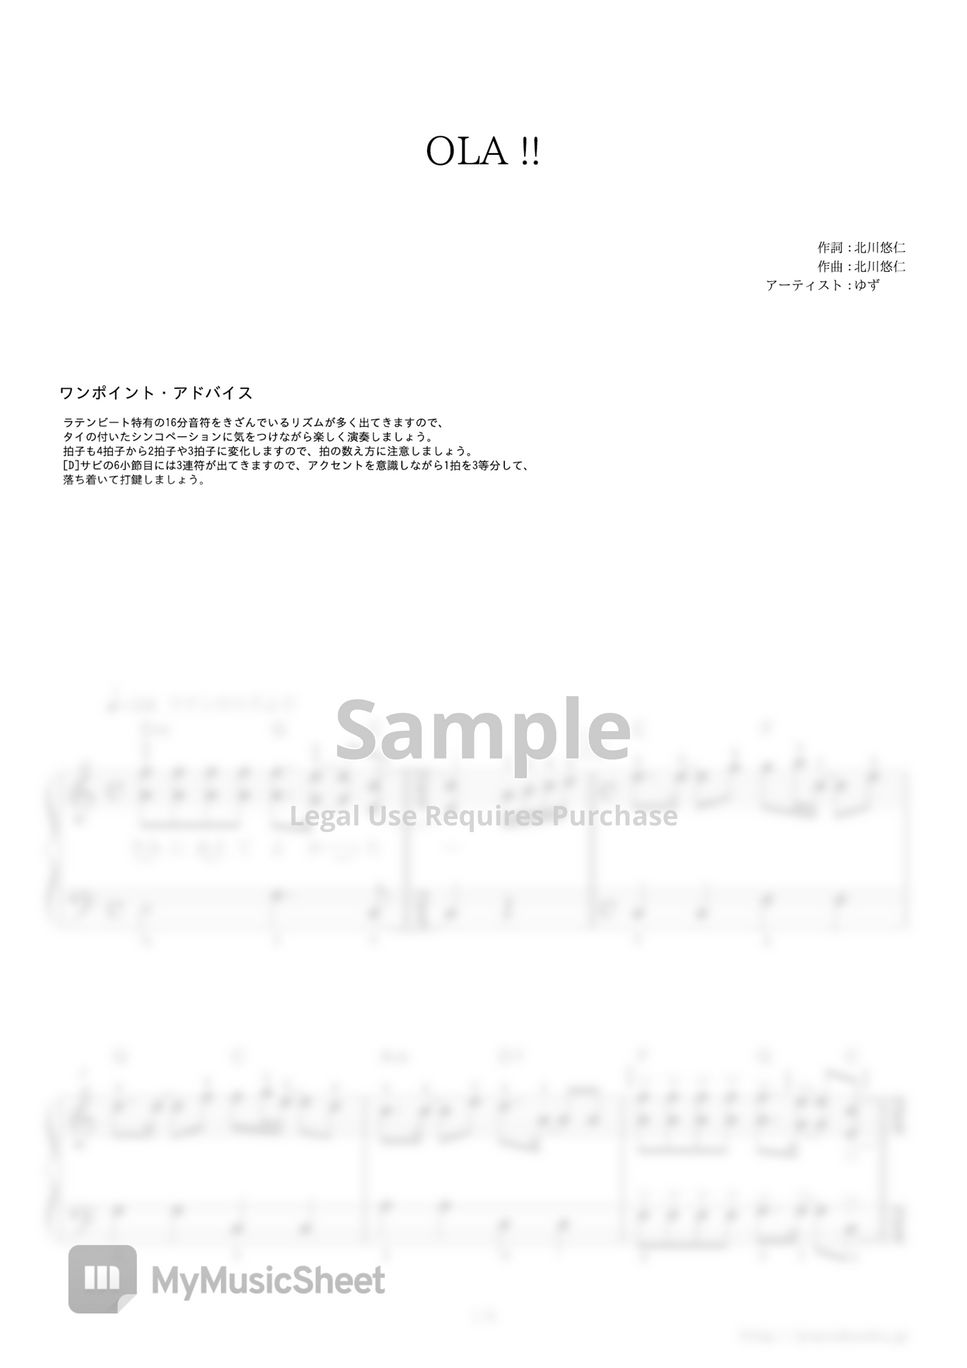 Yuzu - OLA!! (Theme song of movie『CRAYON Shinchan』) by PianoBooks